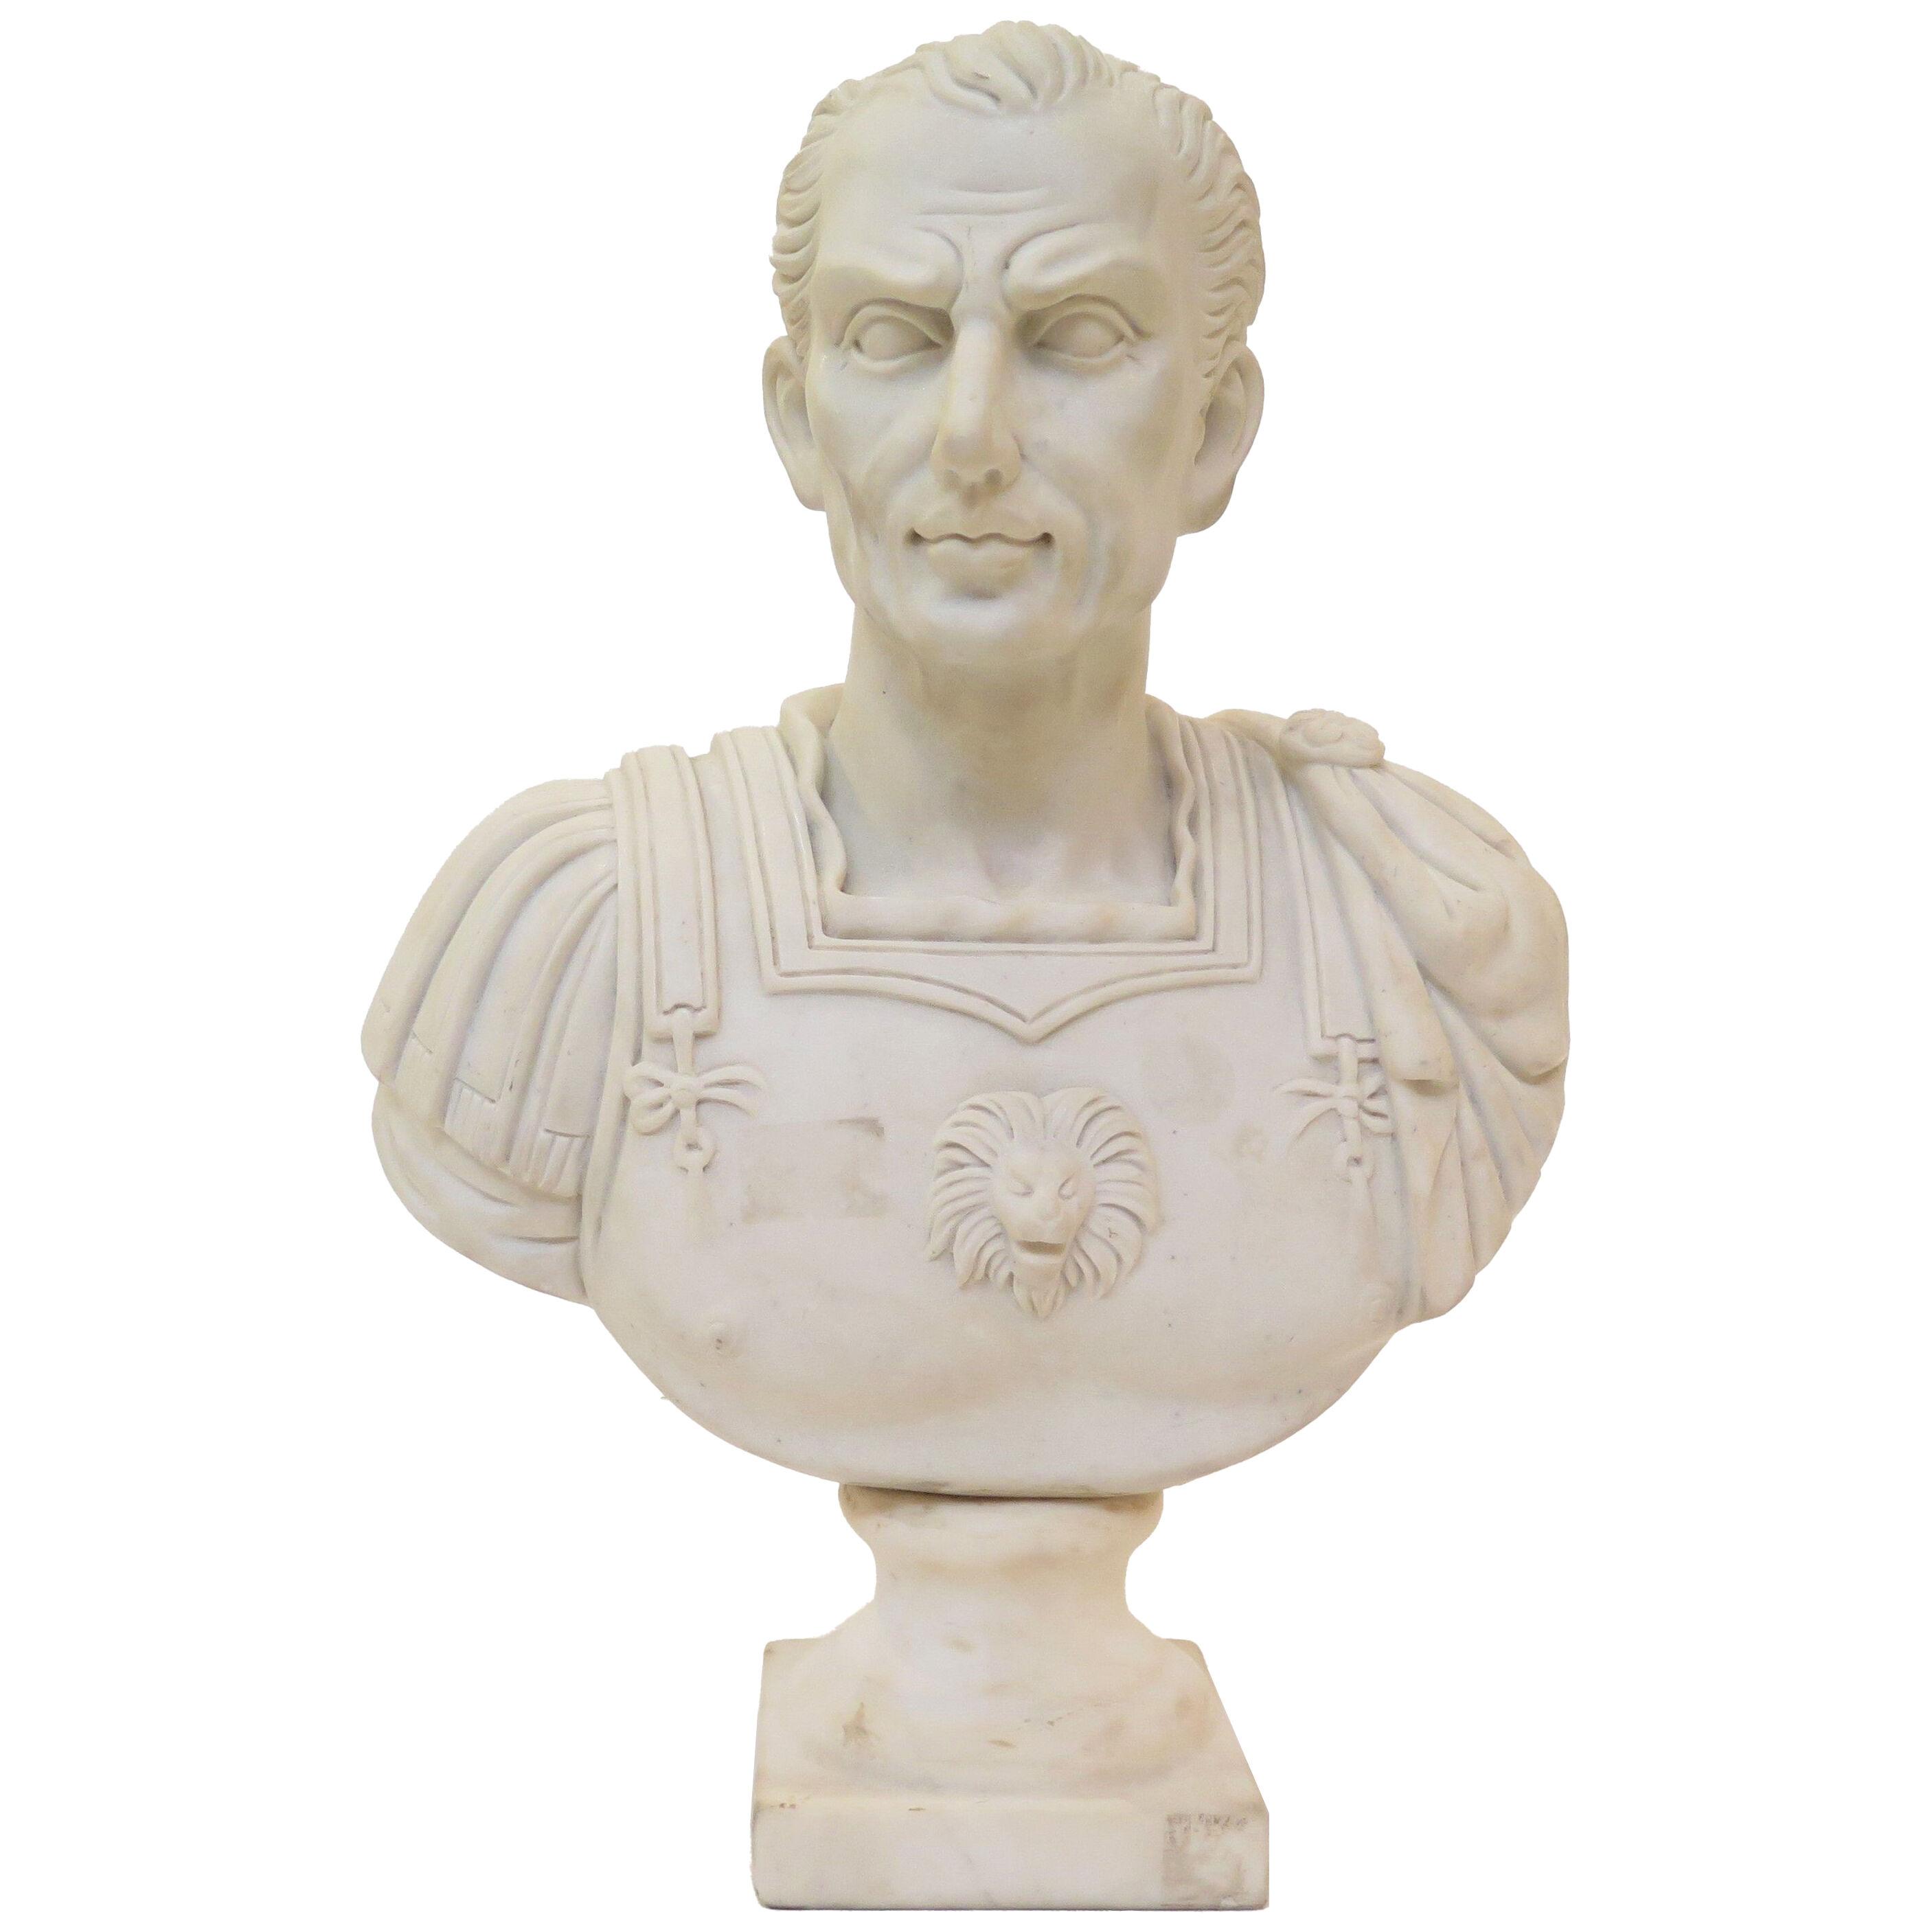 An Italian Carrara Marble Bust of a Roman Emperor